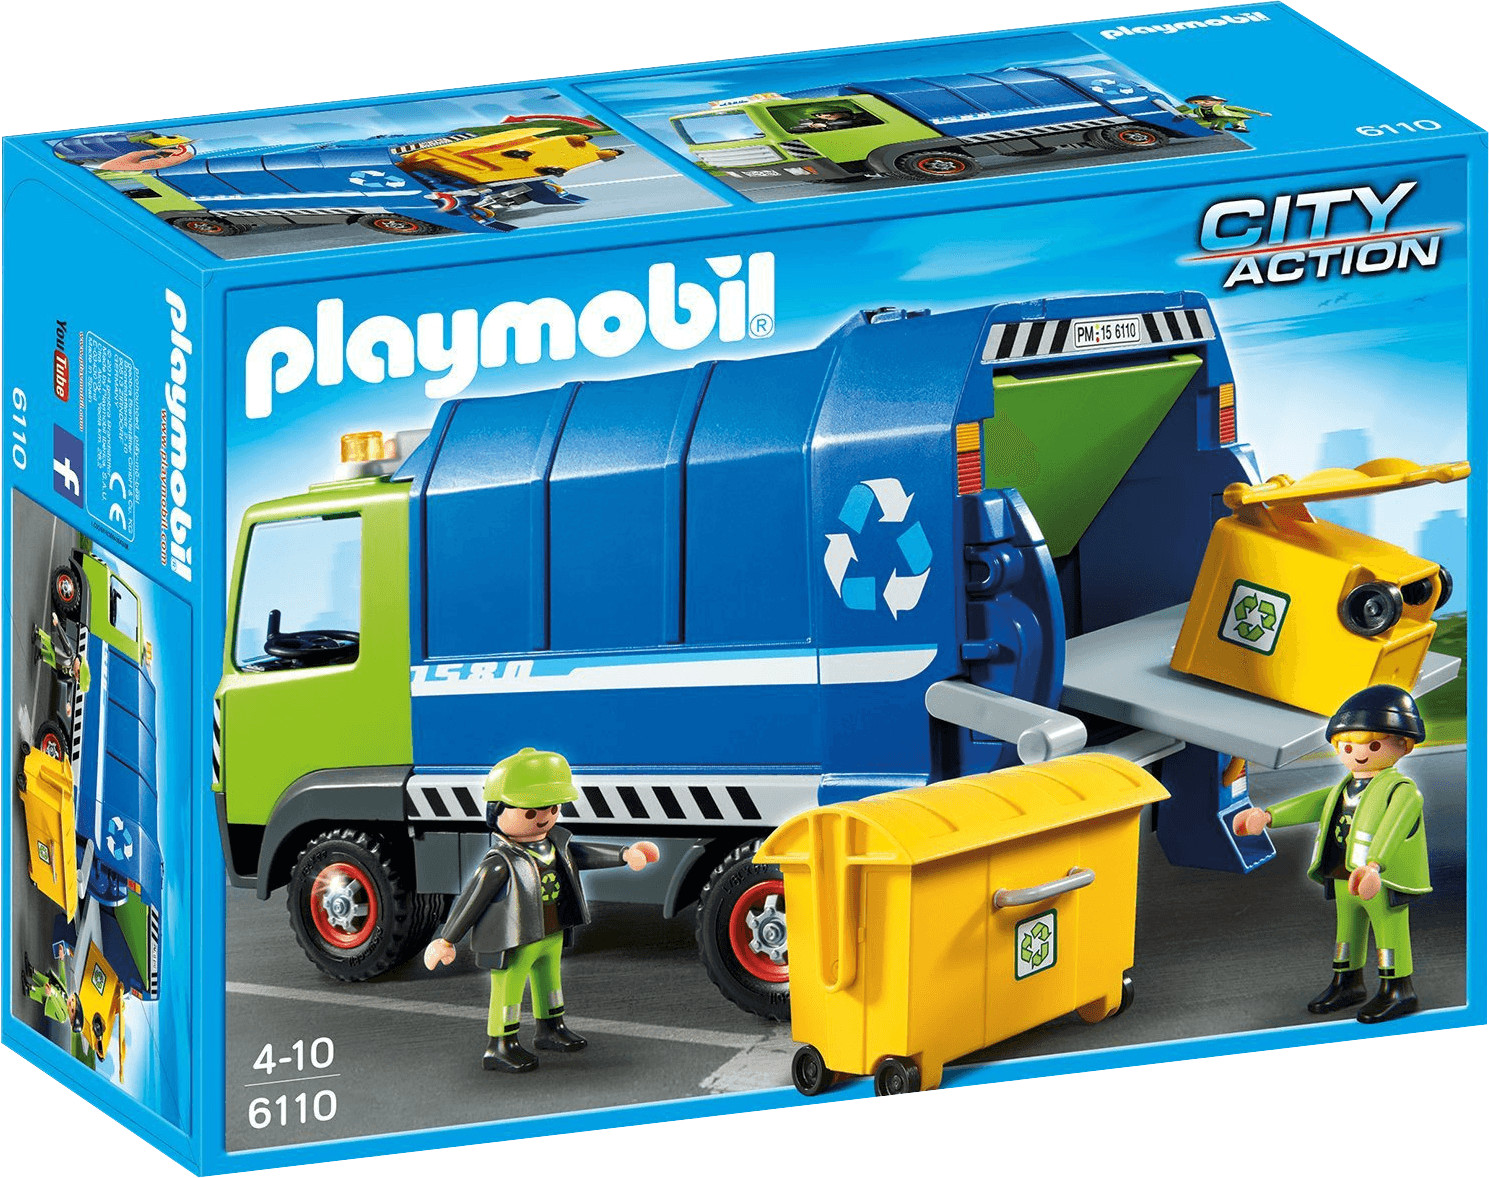 Comptons en images - Page 21 Playmobil-camion-de-recyclage-ordures-6110